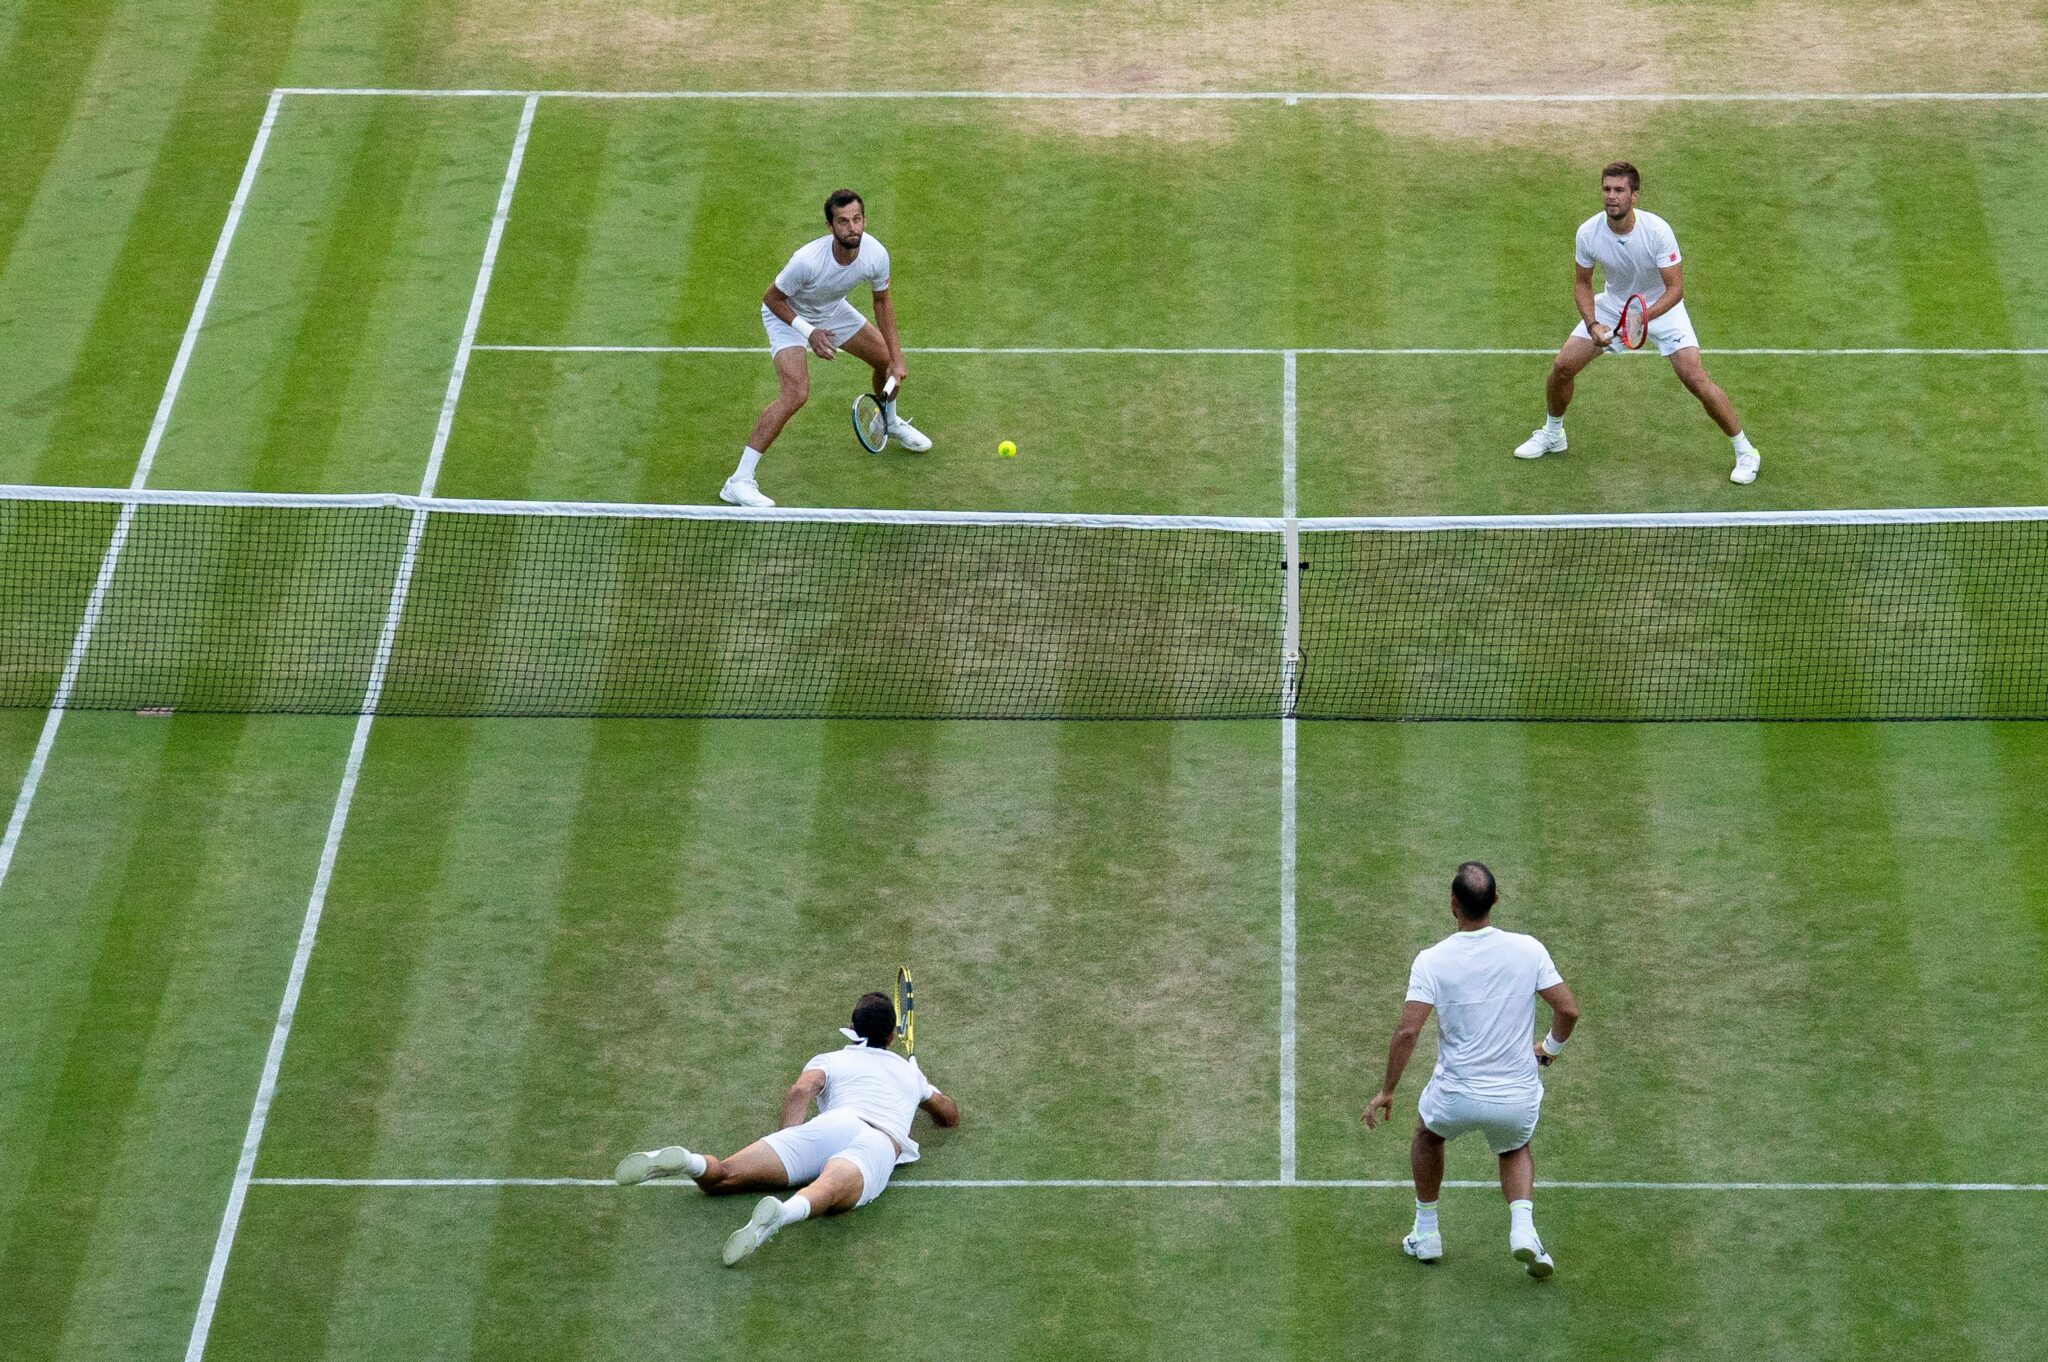 Image of a doubles tennis match at Wimbledon